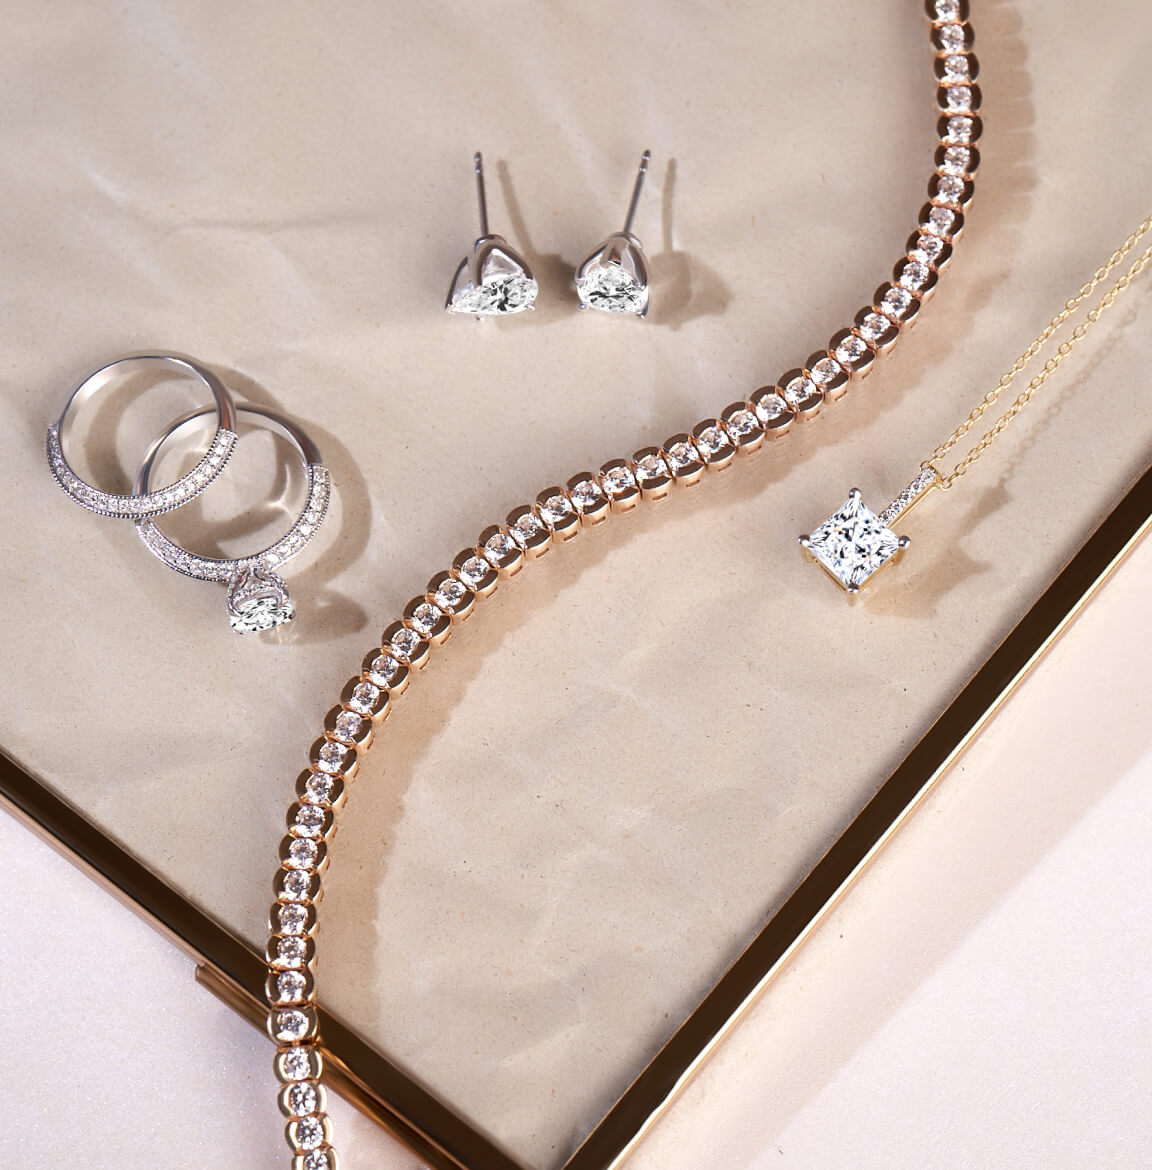 Top 5 Lab Diamond Jewellery To Celebrate Mother's day